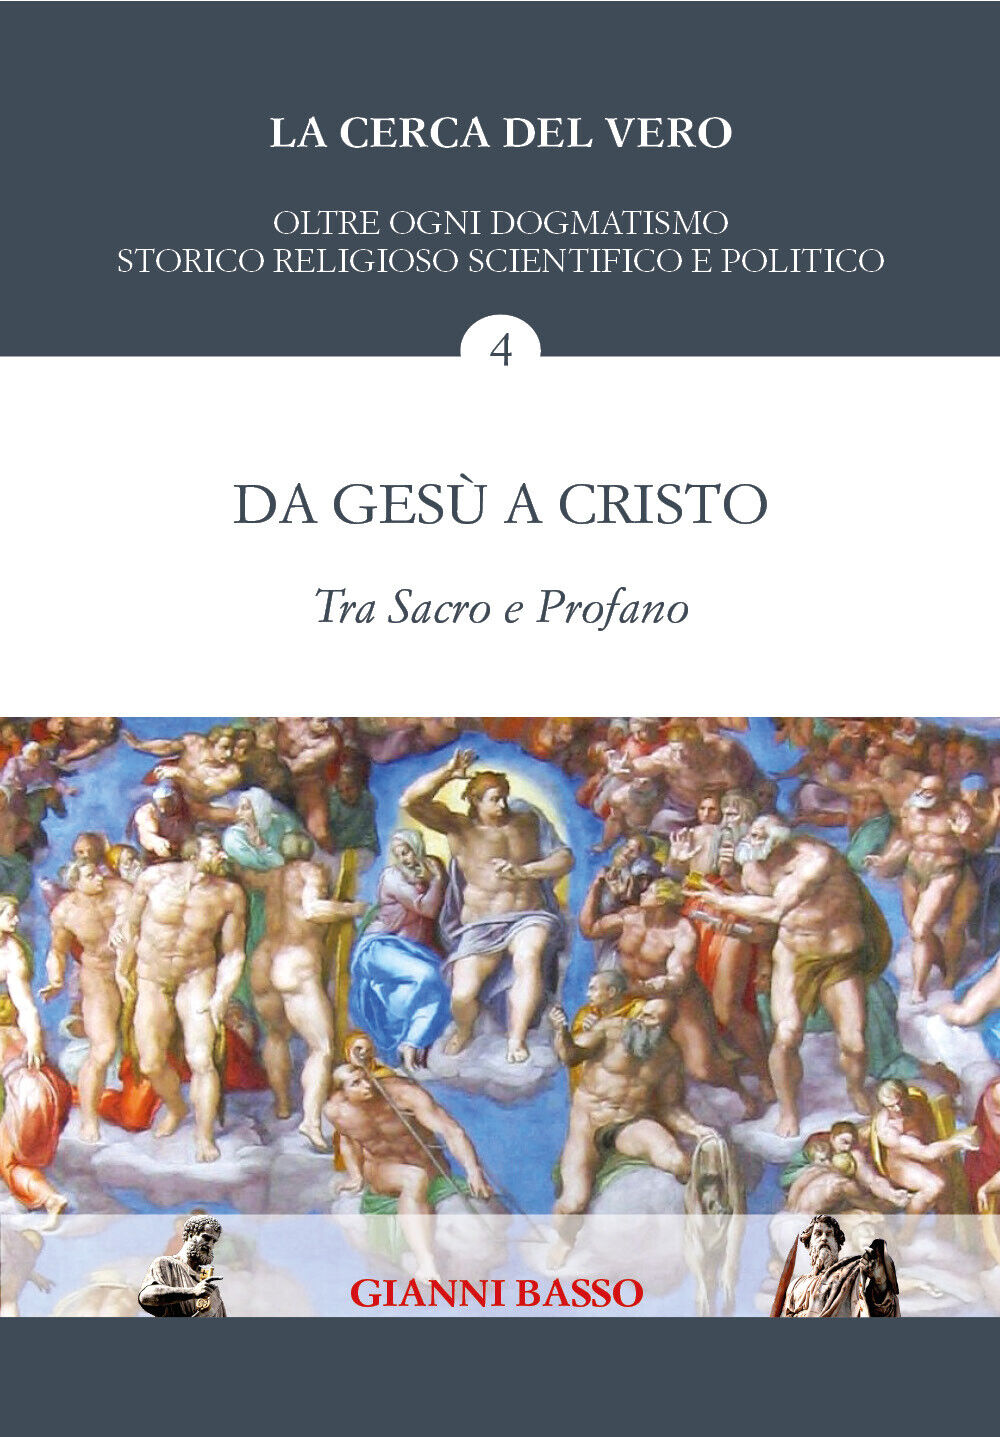 Da Ges? a Cristo: Tra sacro e profano di Gianni Basso,  2021,  Youcanprint